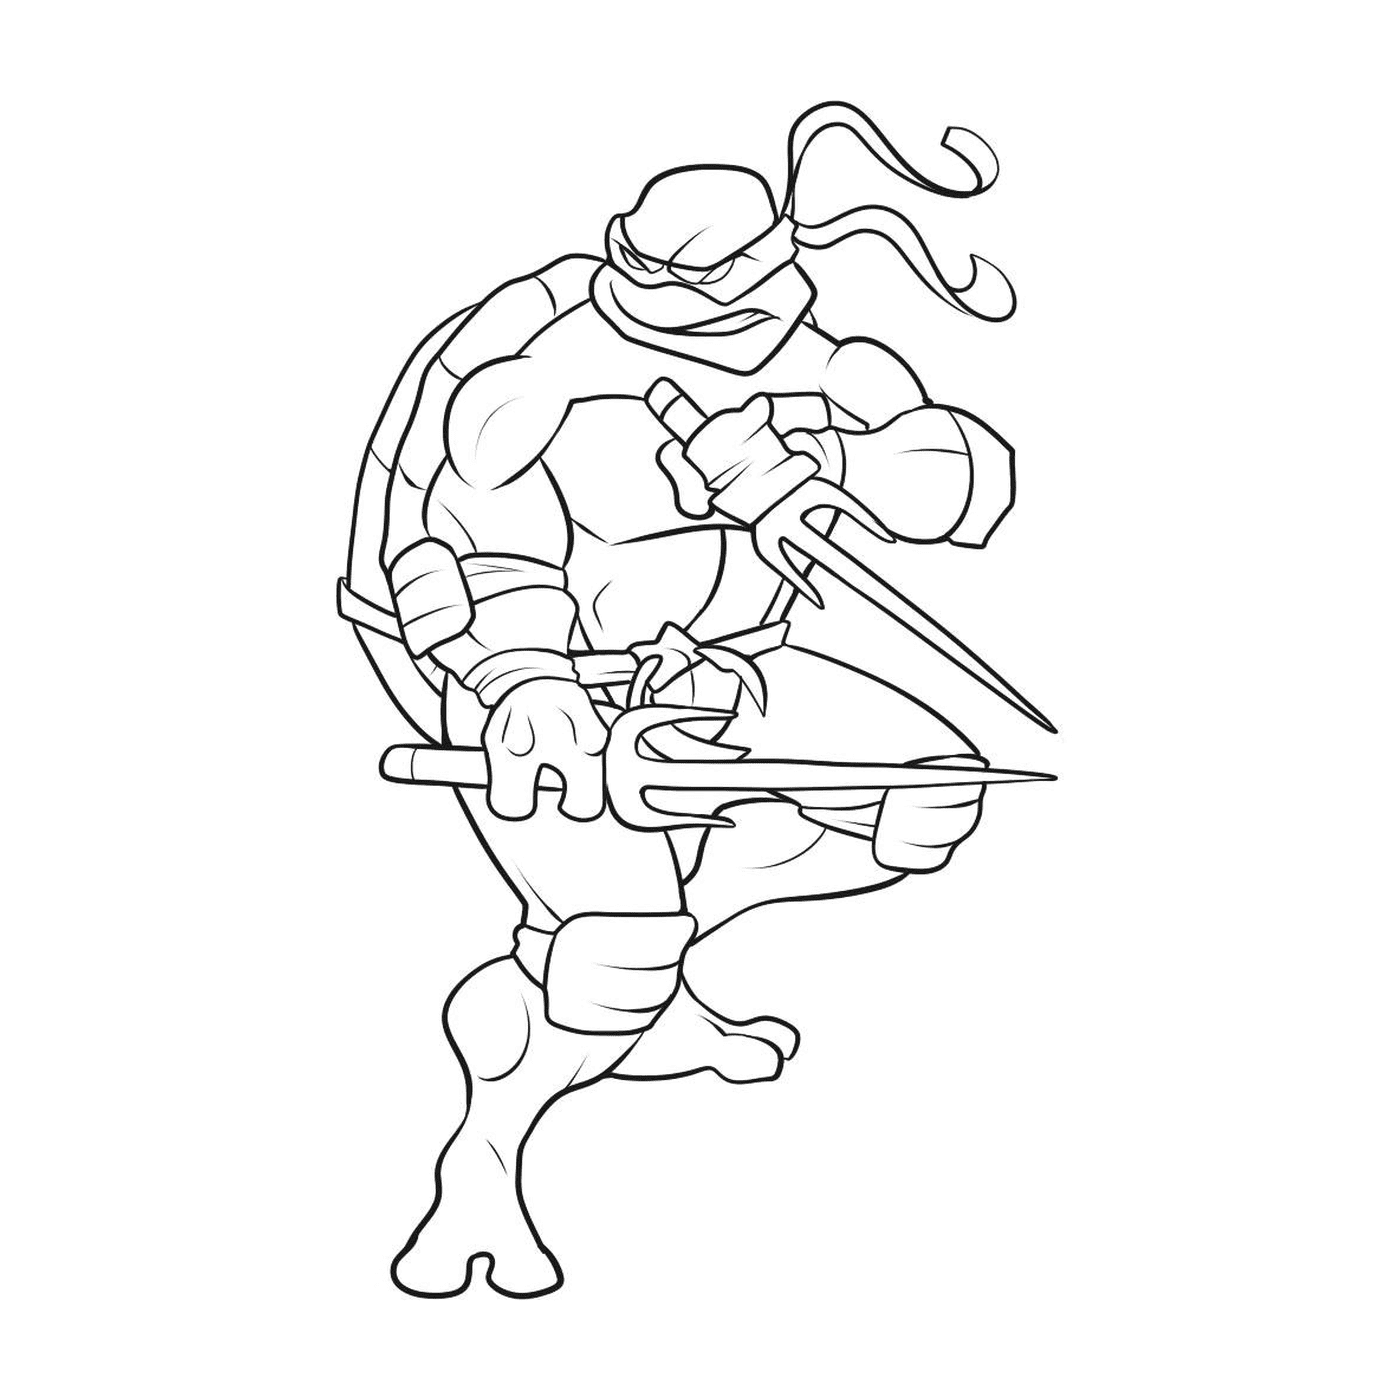  Tartaruga ninja com arco 